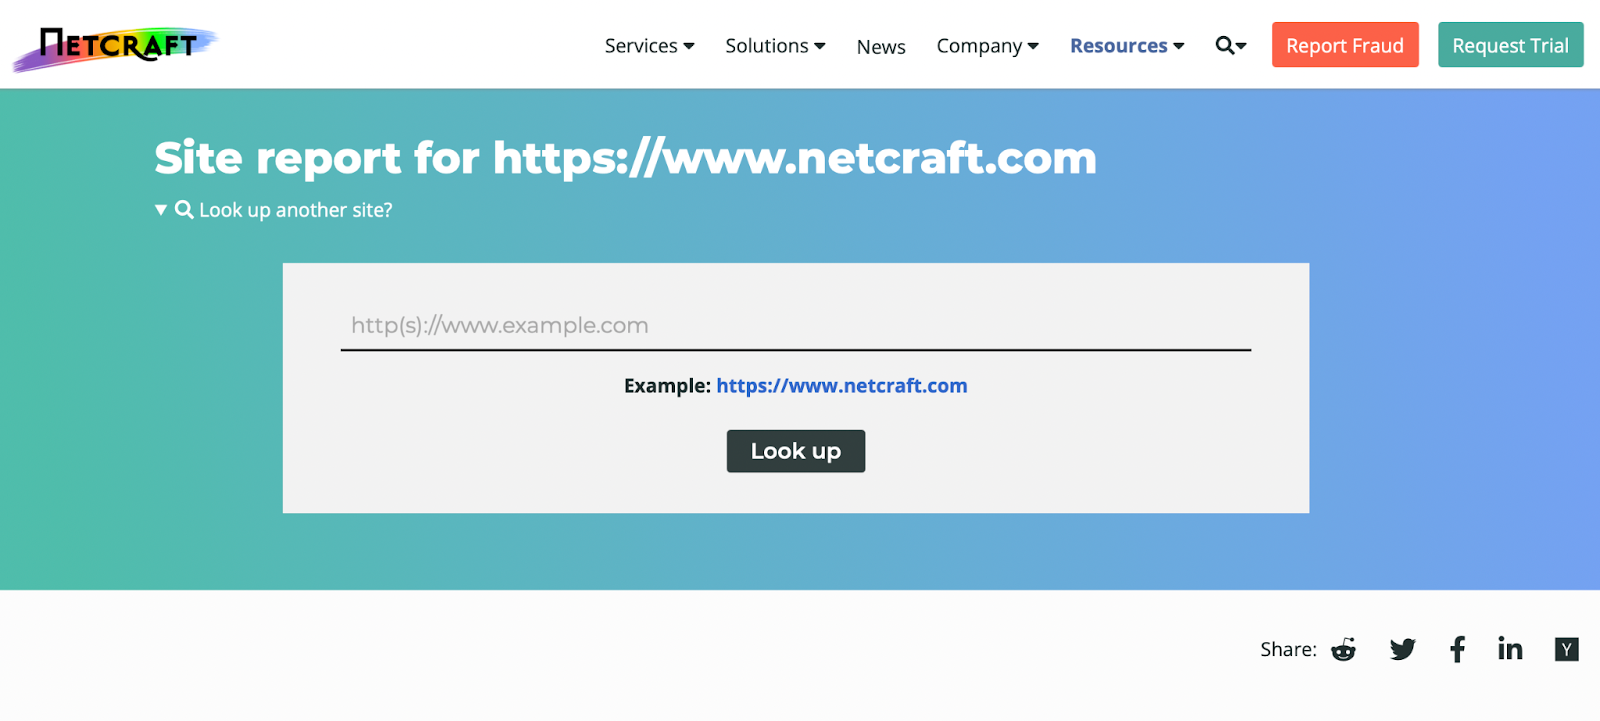 Netcraft Homepage Screenshot (Technology Profiling Tool)